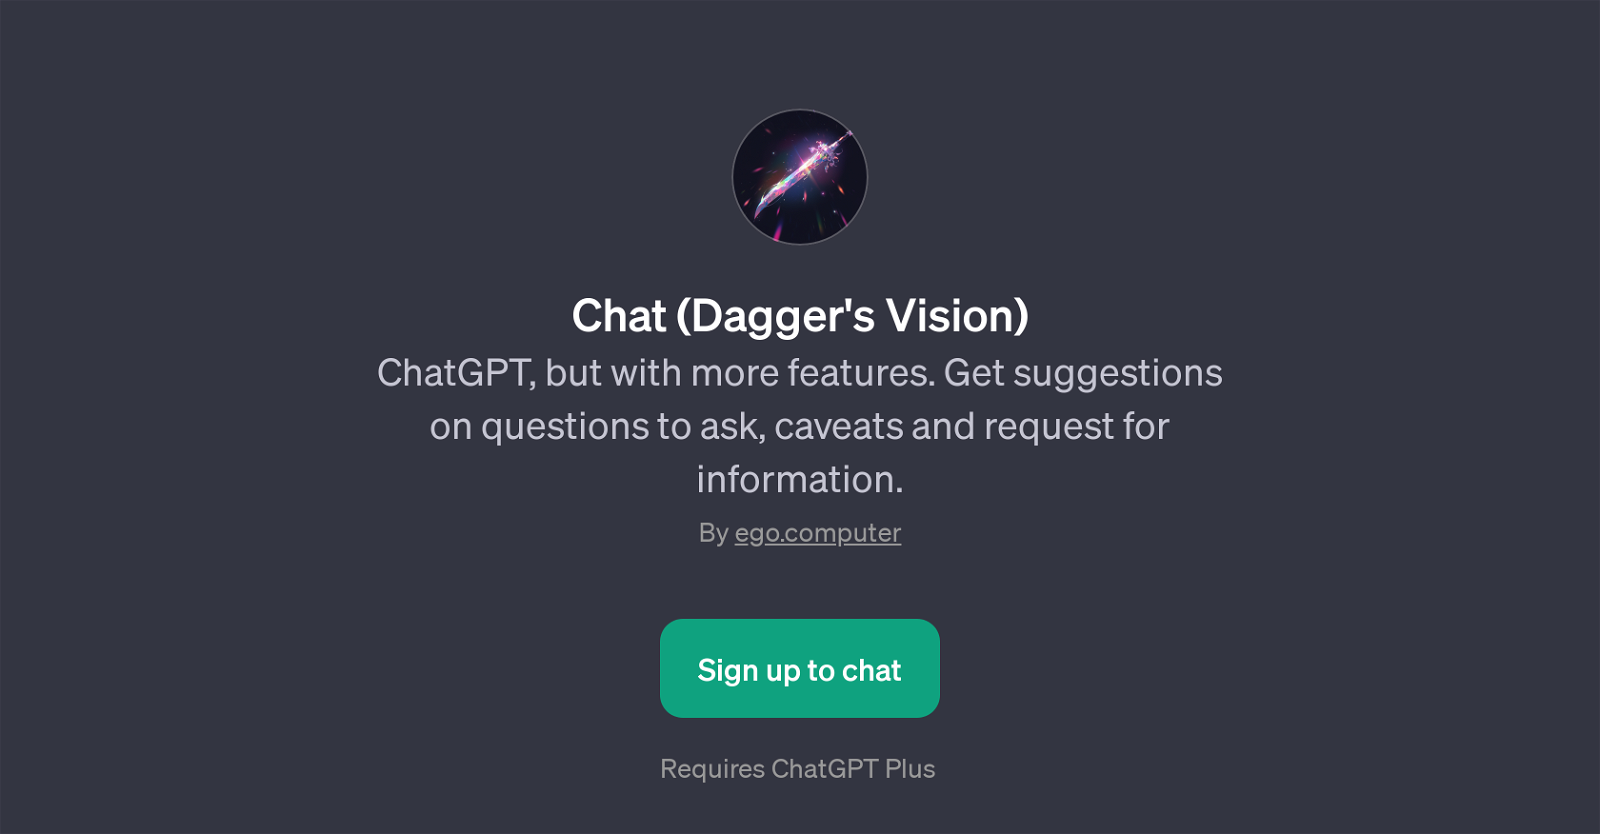 Chat (Dagger's Vision) website